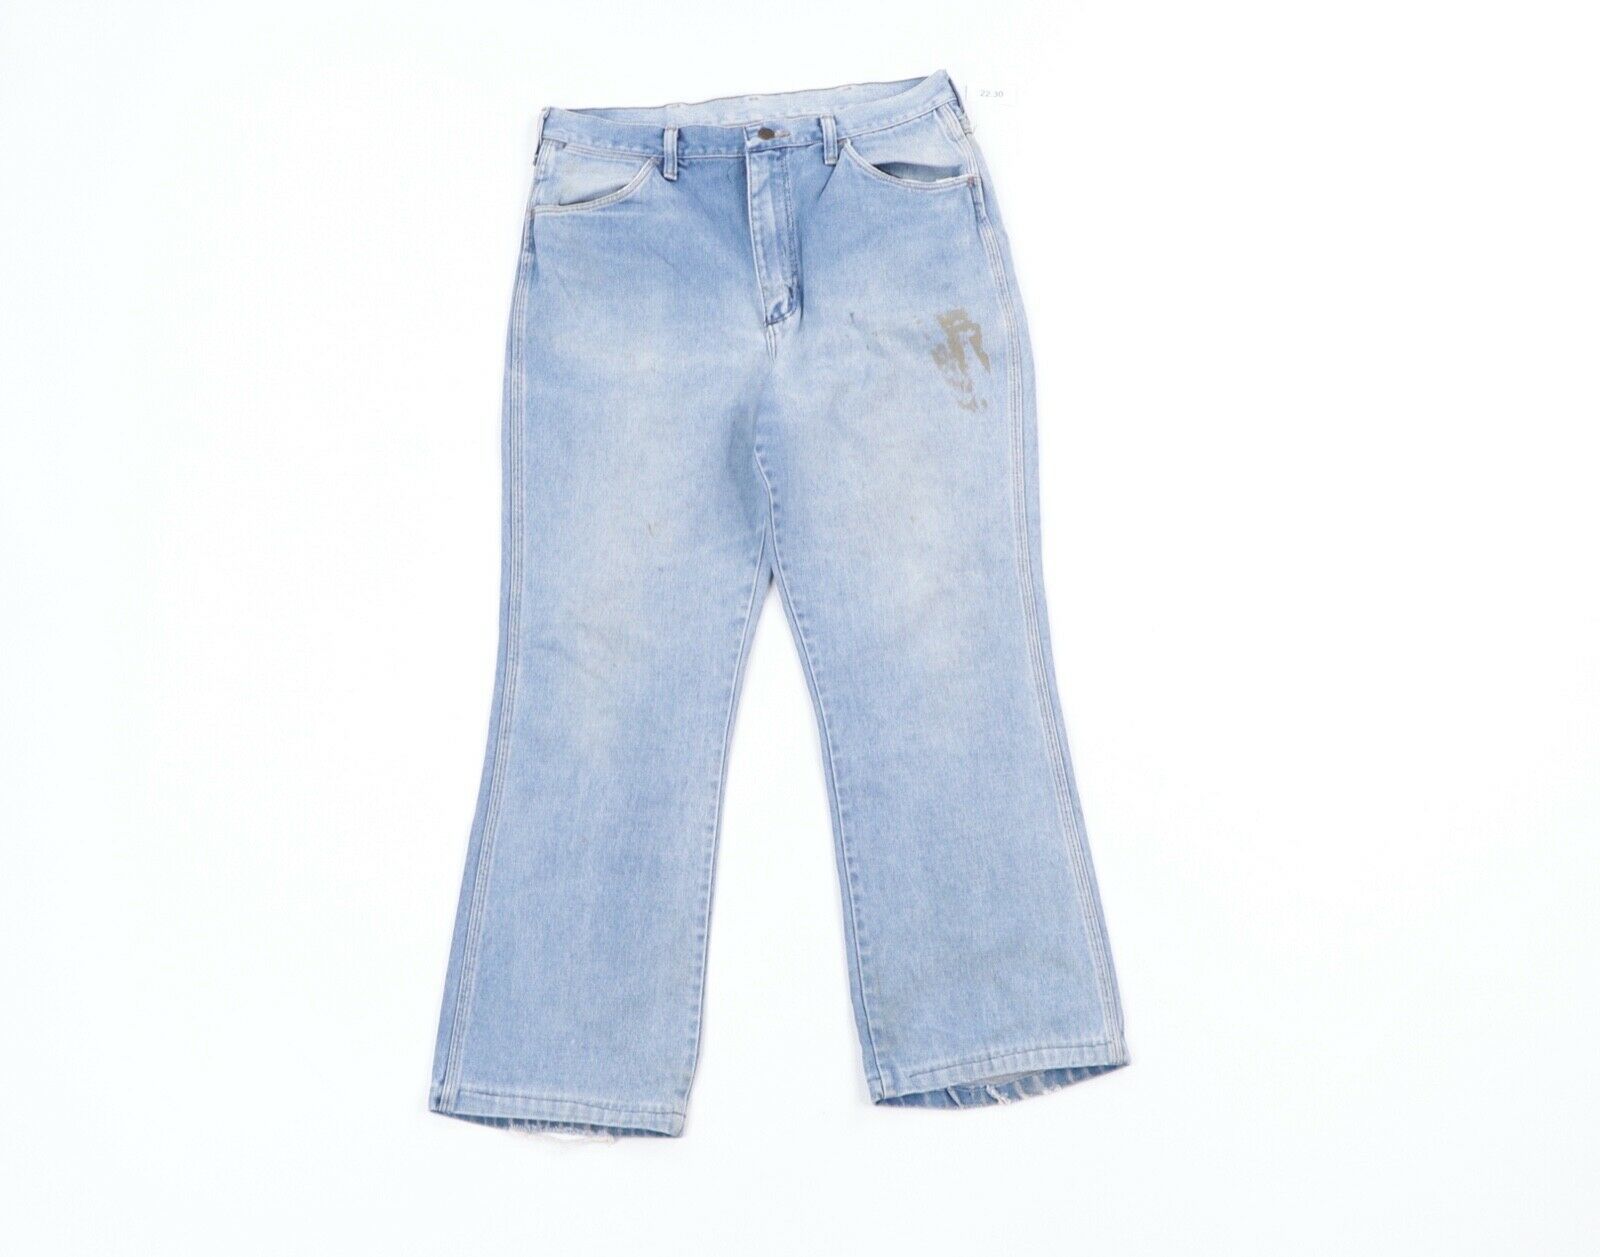 Vintage Vintage 80s Wrangler Bootcut Thrashed Jeans Blue 34x28 Size US 34 / EU 50 - 1 Preview